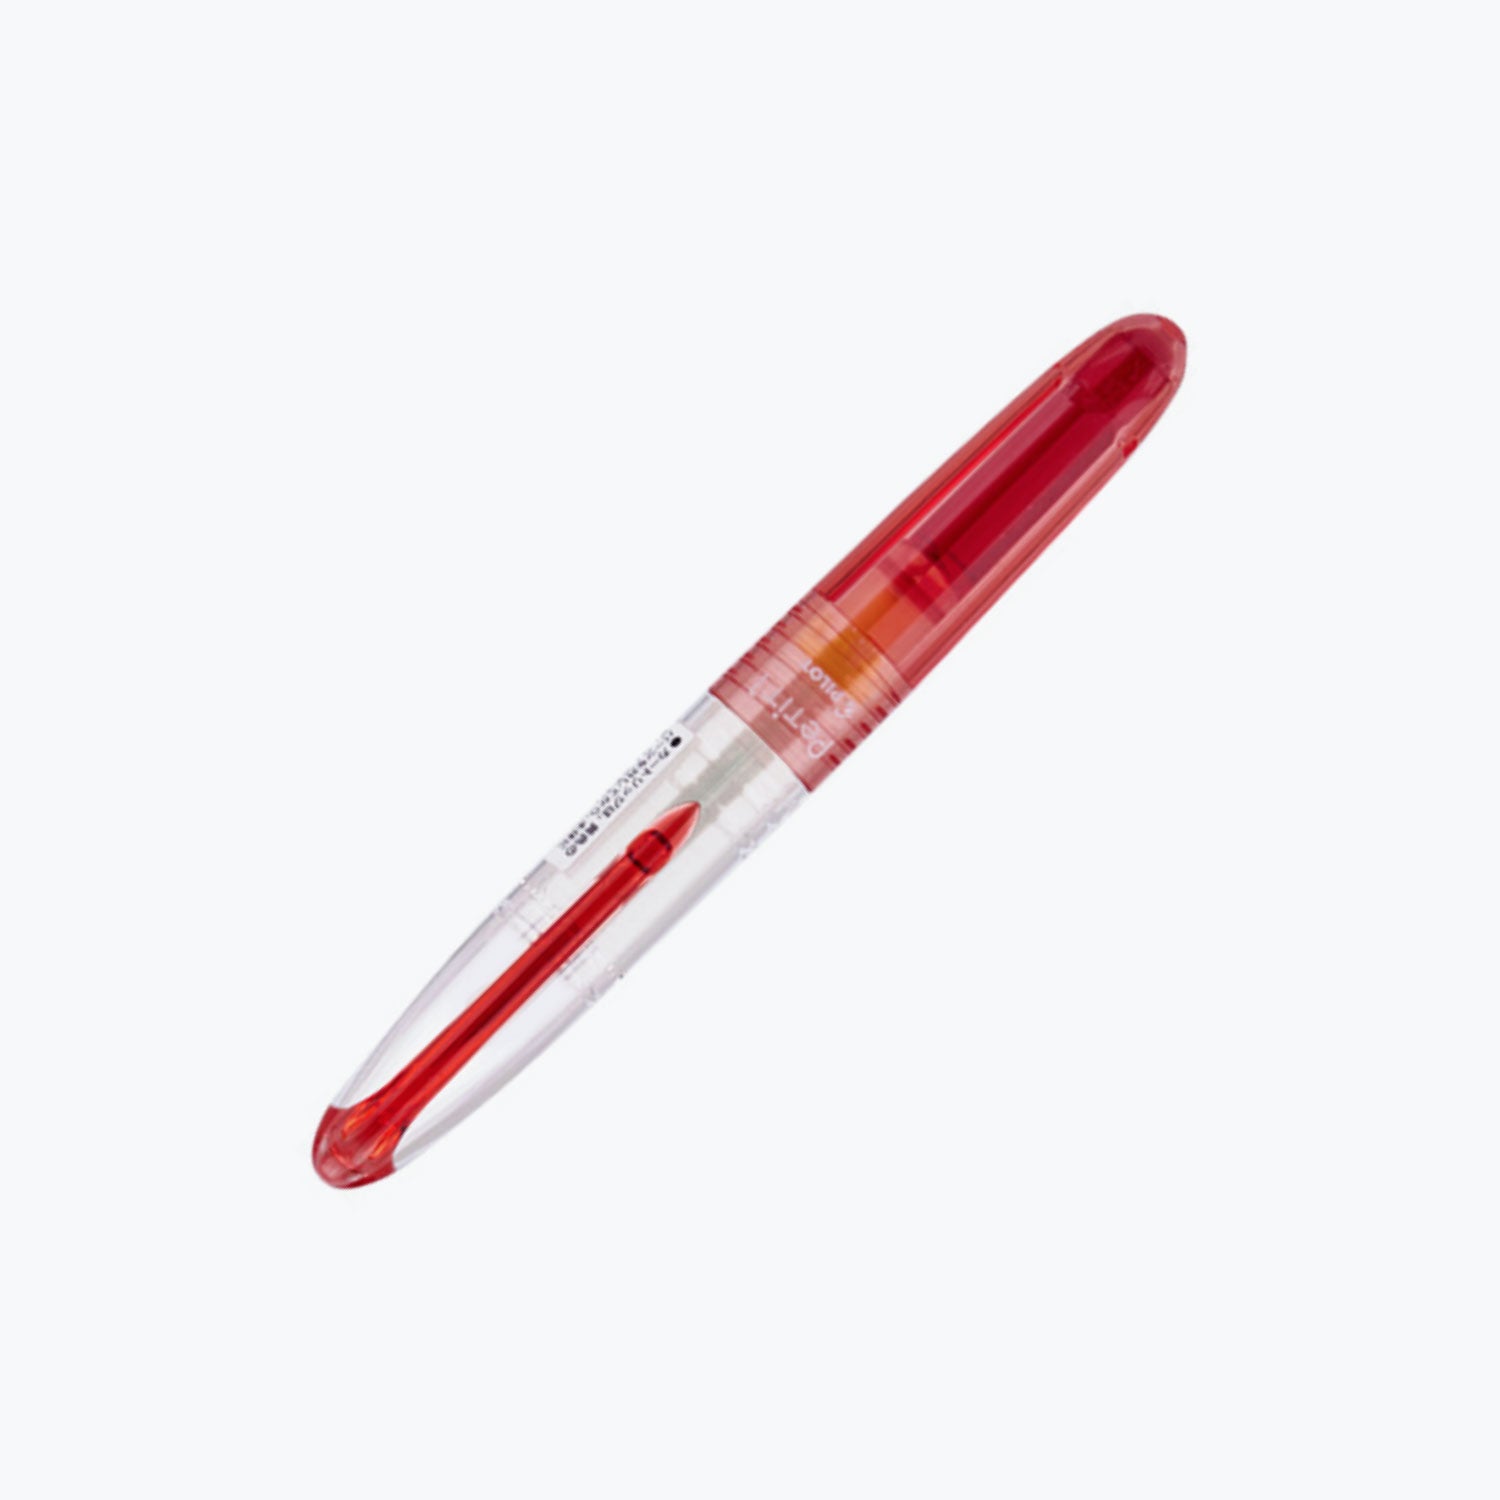 Pilot - Brush Pen - Petit - Red <Outgoing>